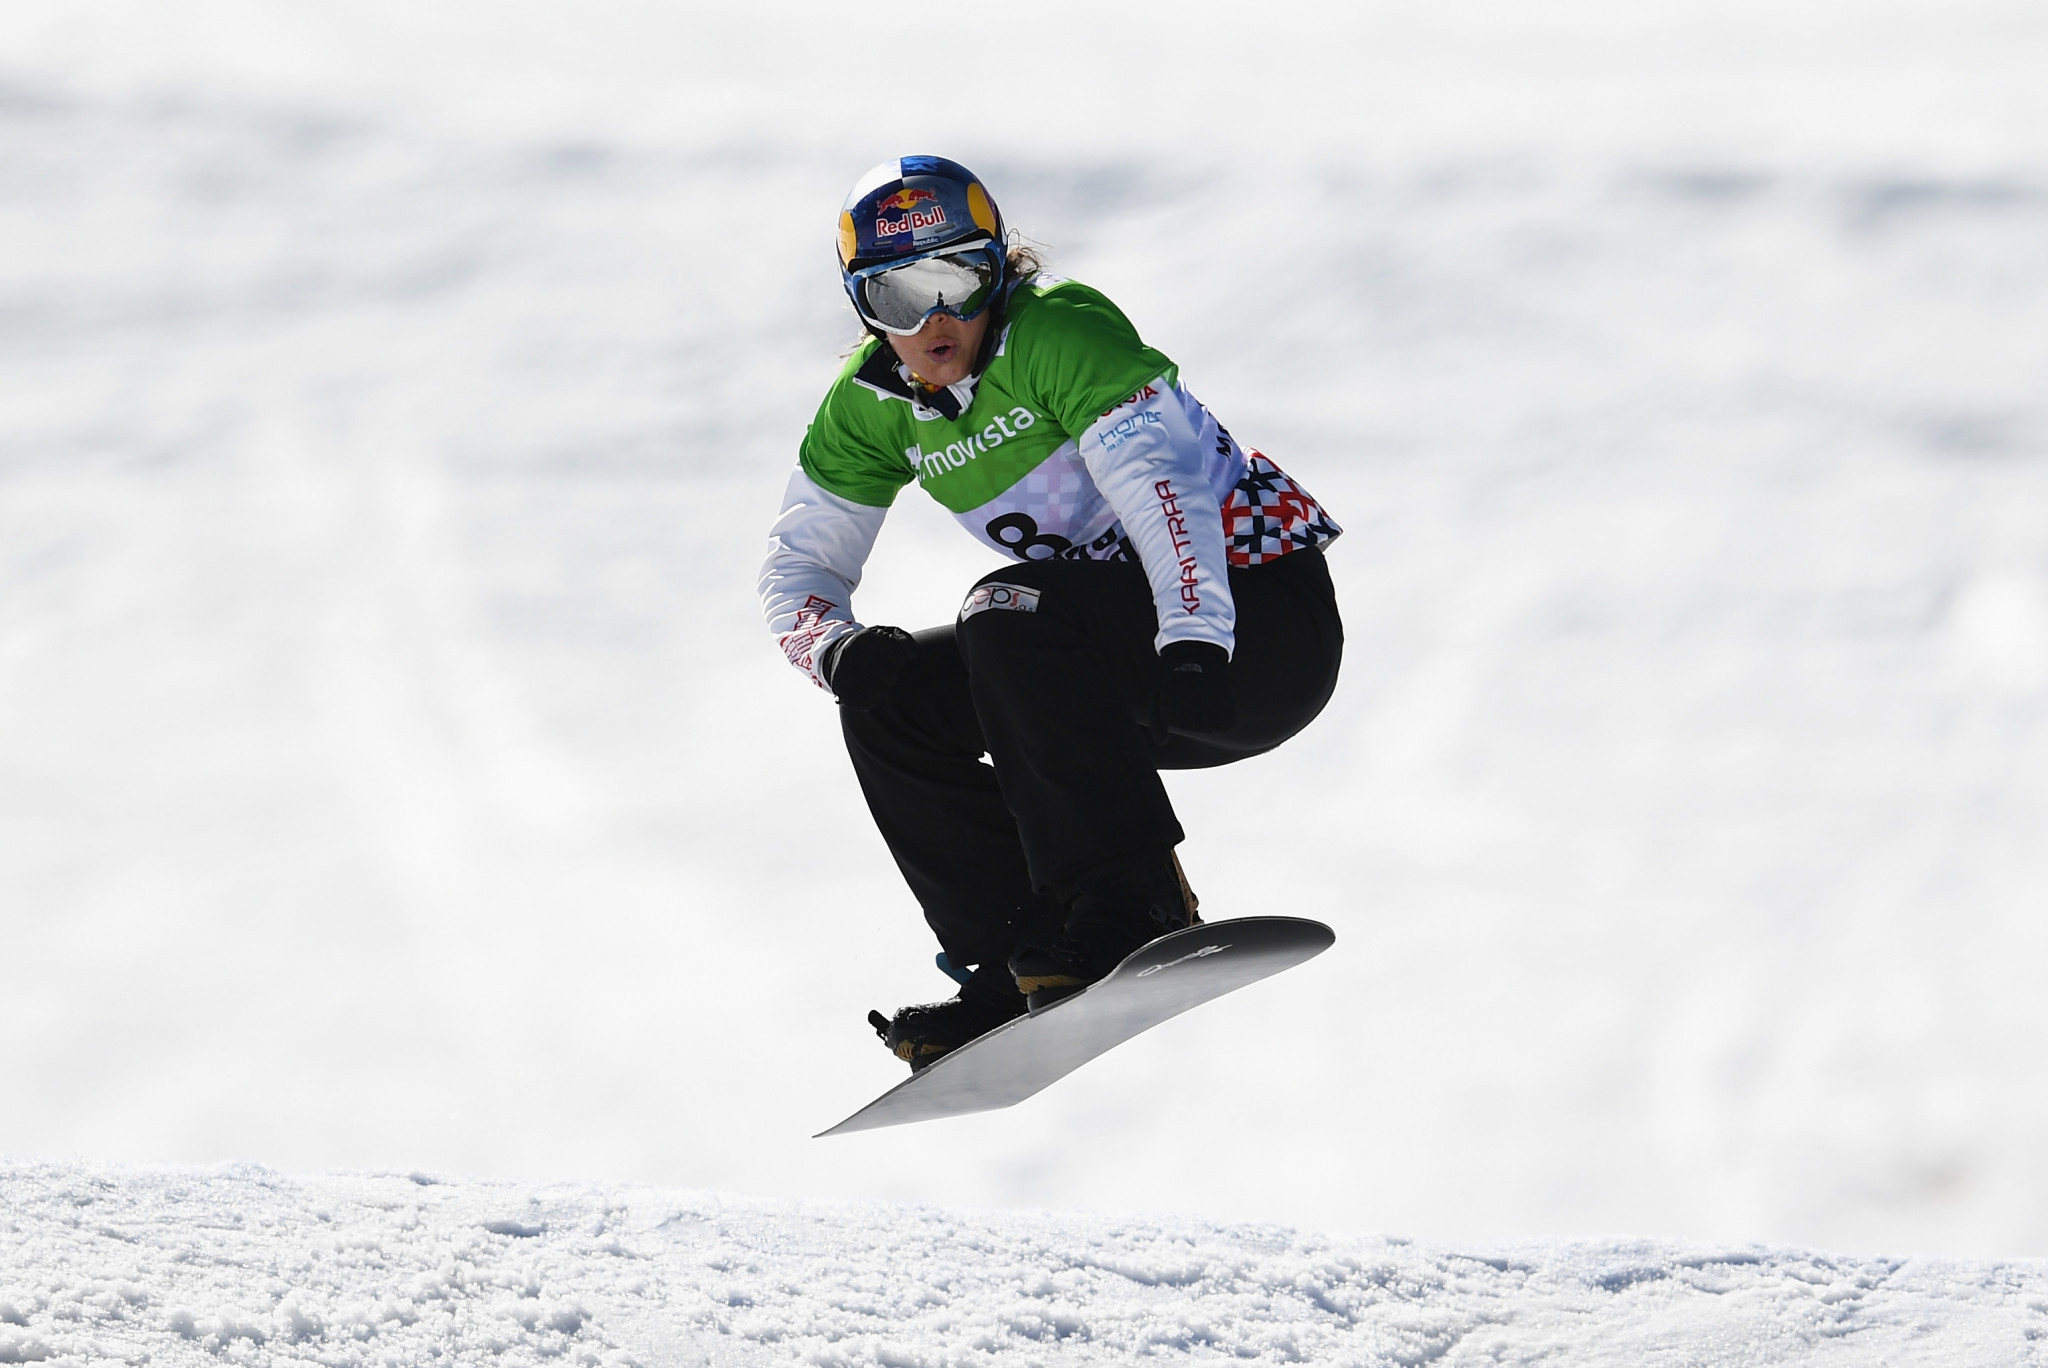 Olympic champion Samková makes impressive start to FIS Snowboard Cross World Cup campaign